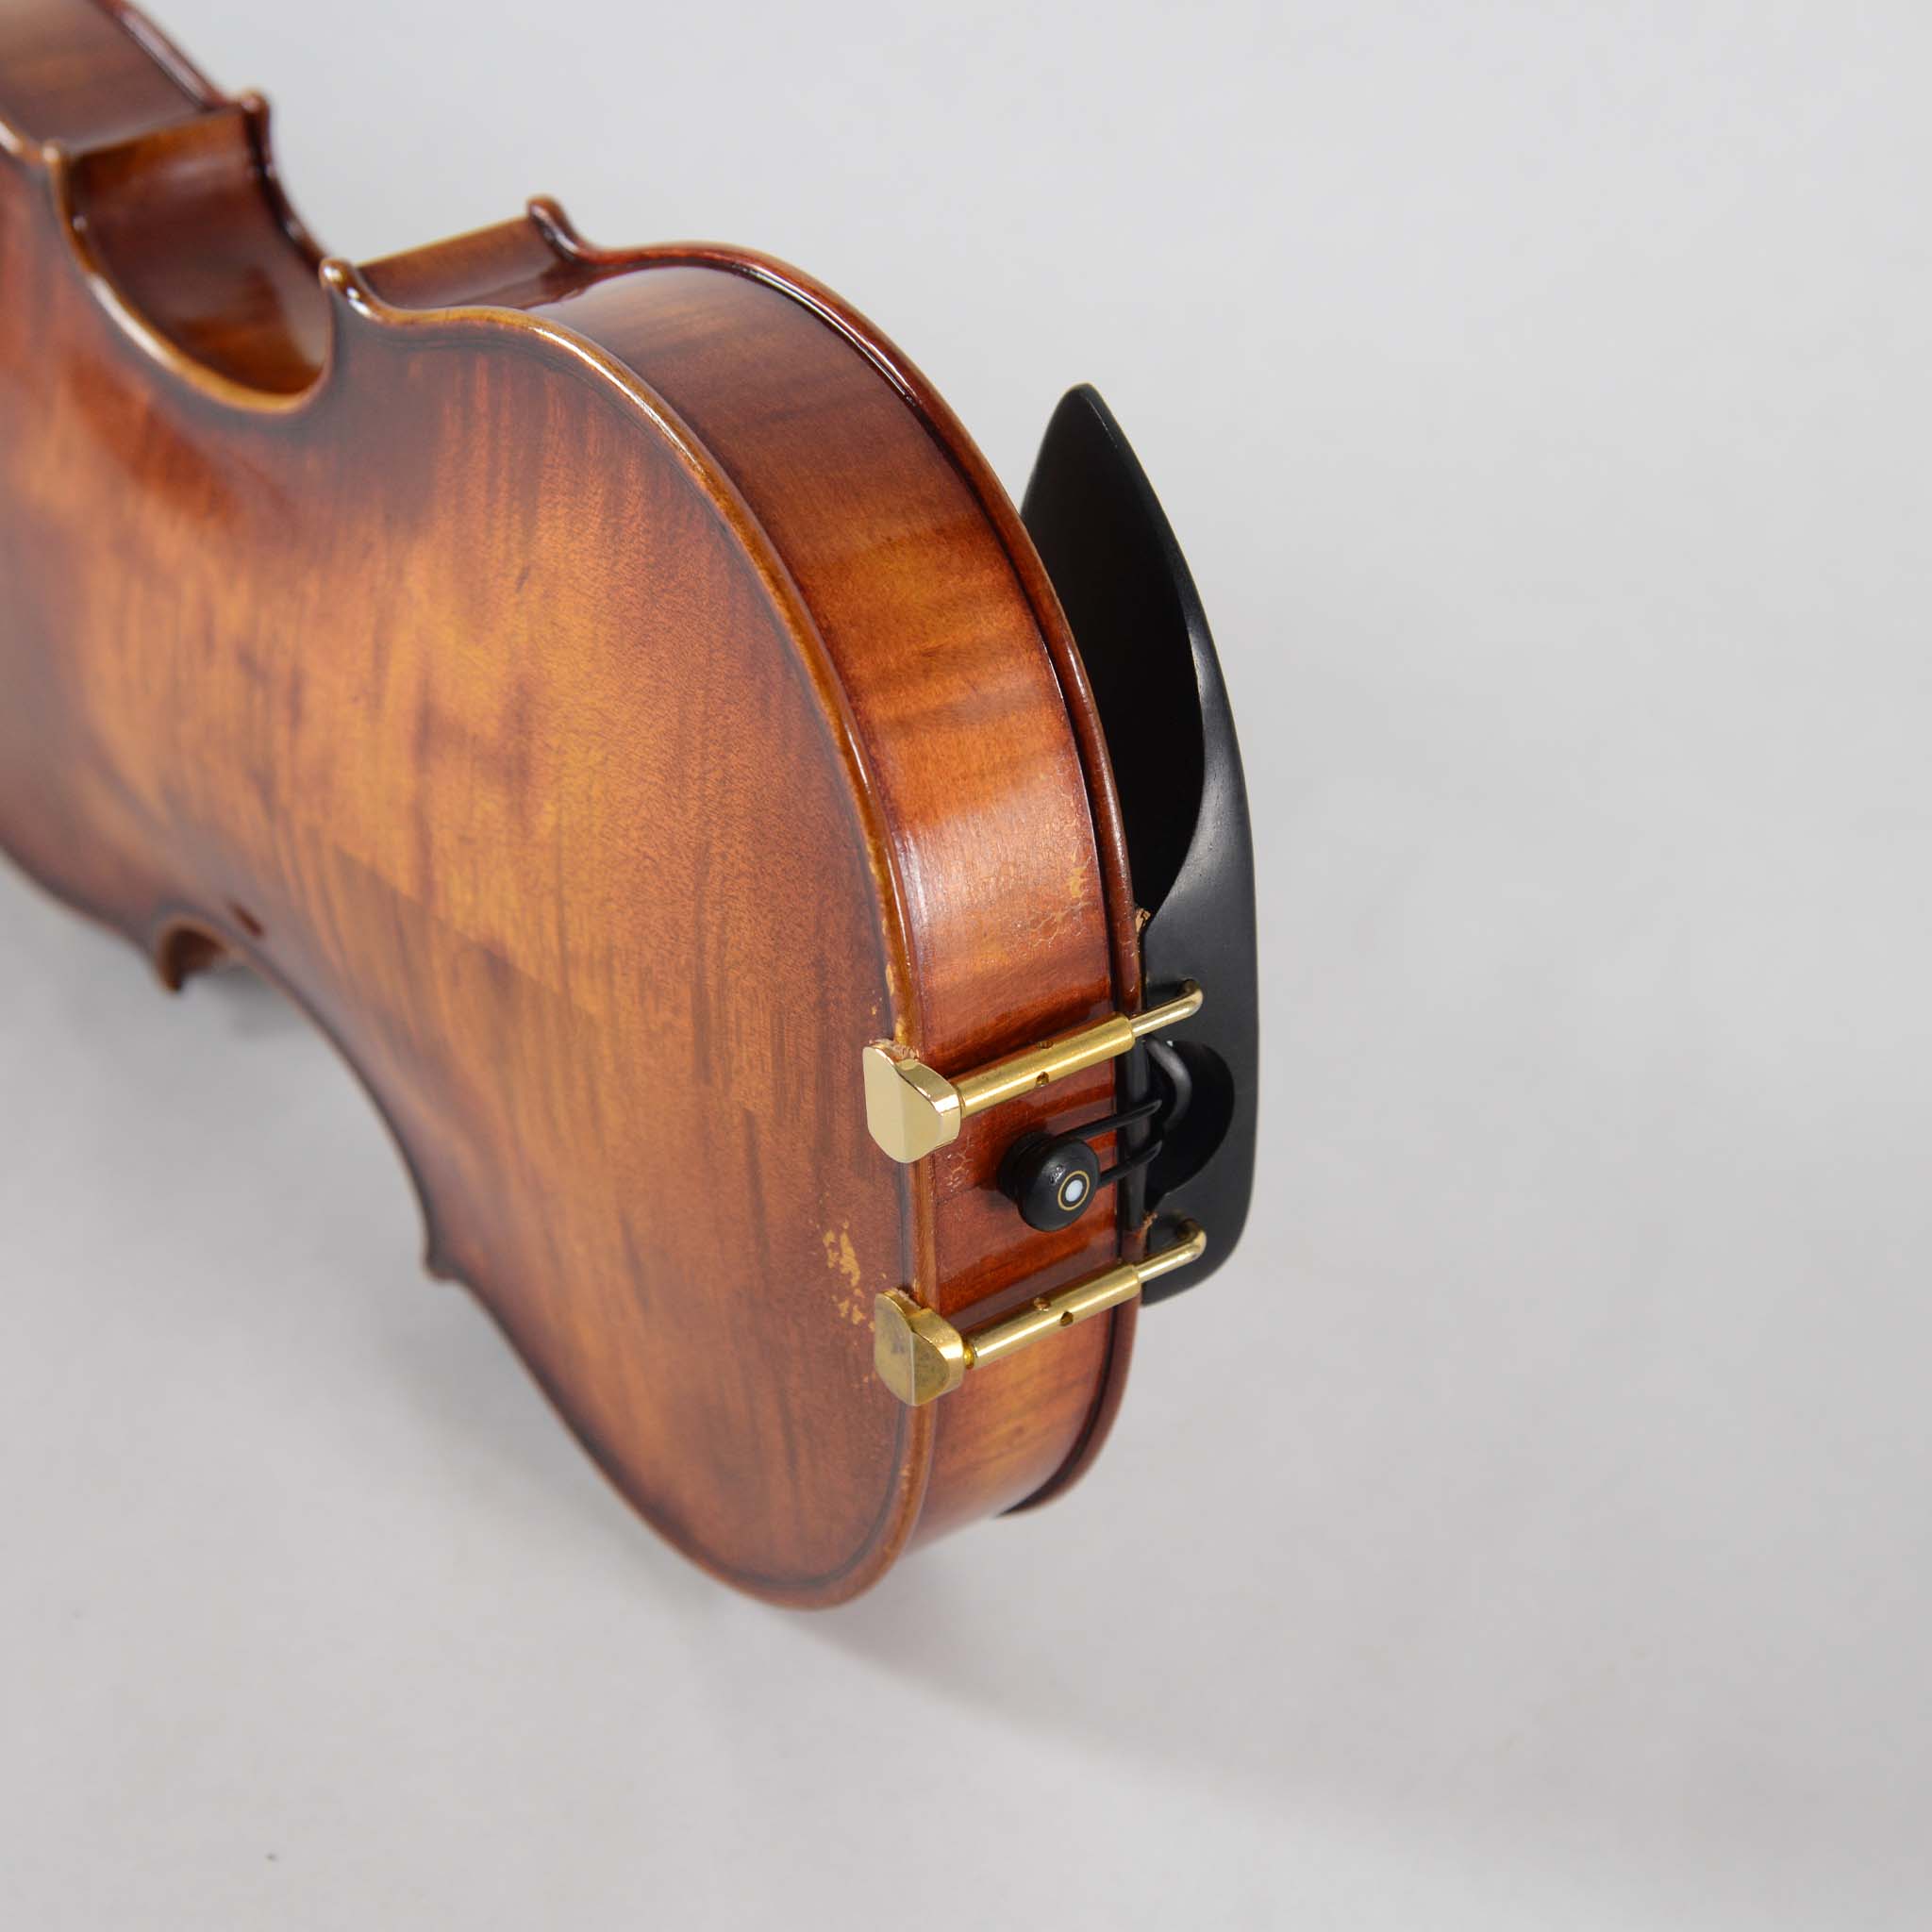 Pre-owned Ming Jiang Zhu 903 3/4 Size Violin